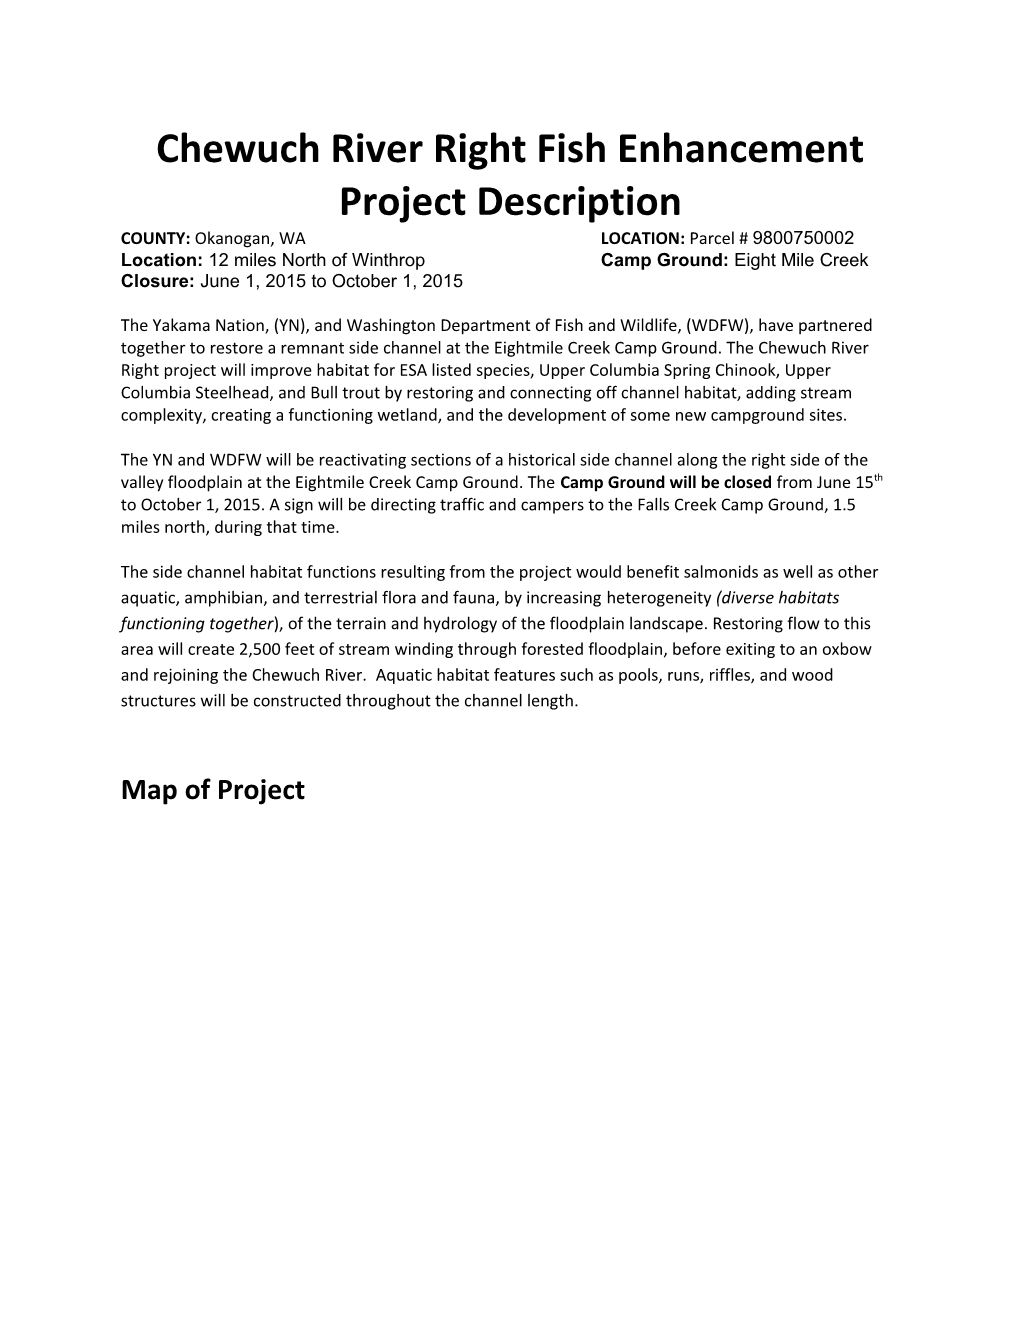 Chewuch River Right Fish Enhancement Project Description